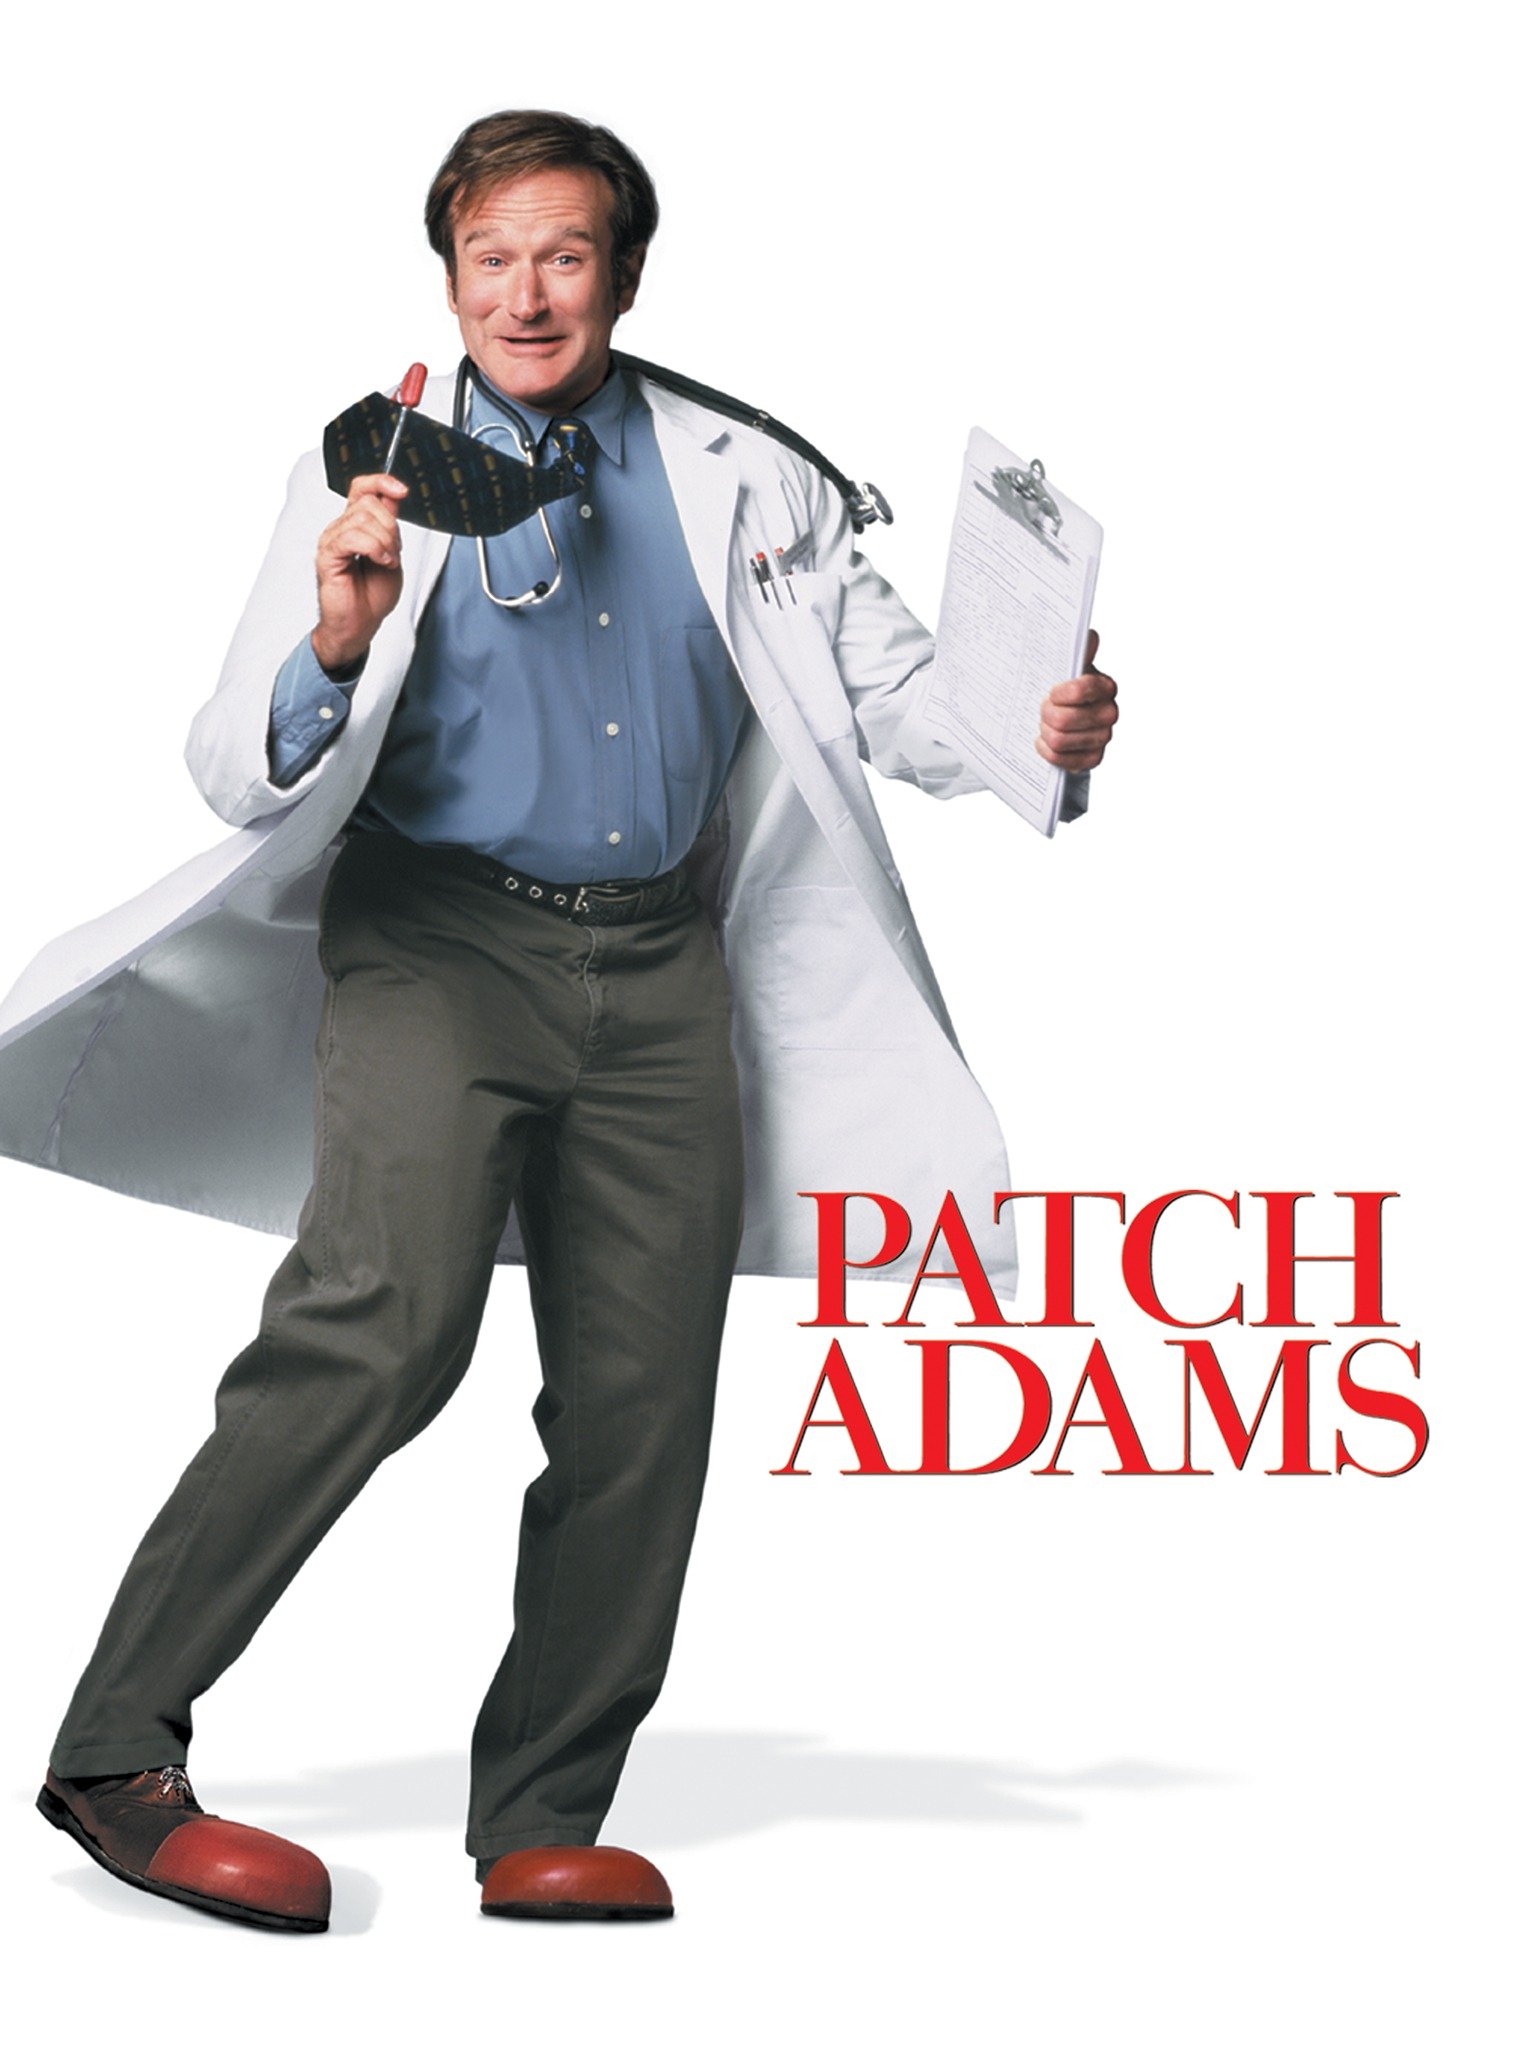 fairfax hospital patch adams